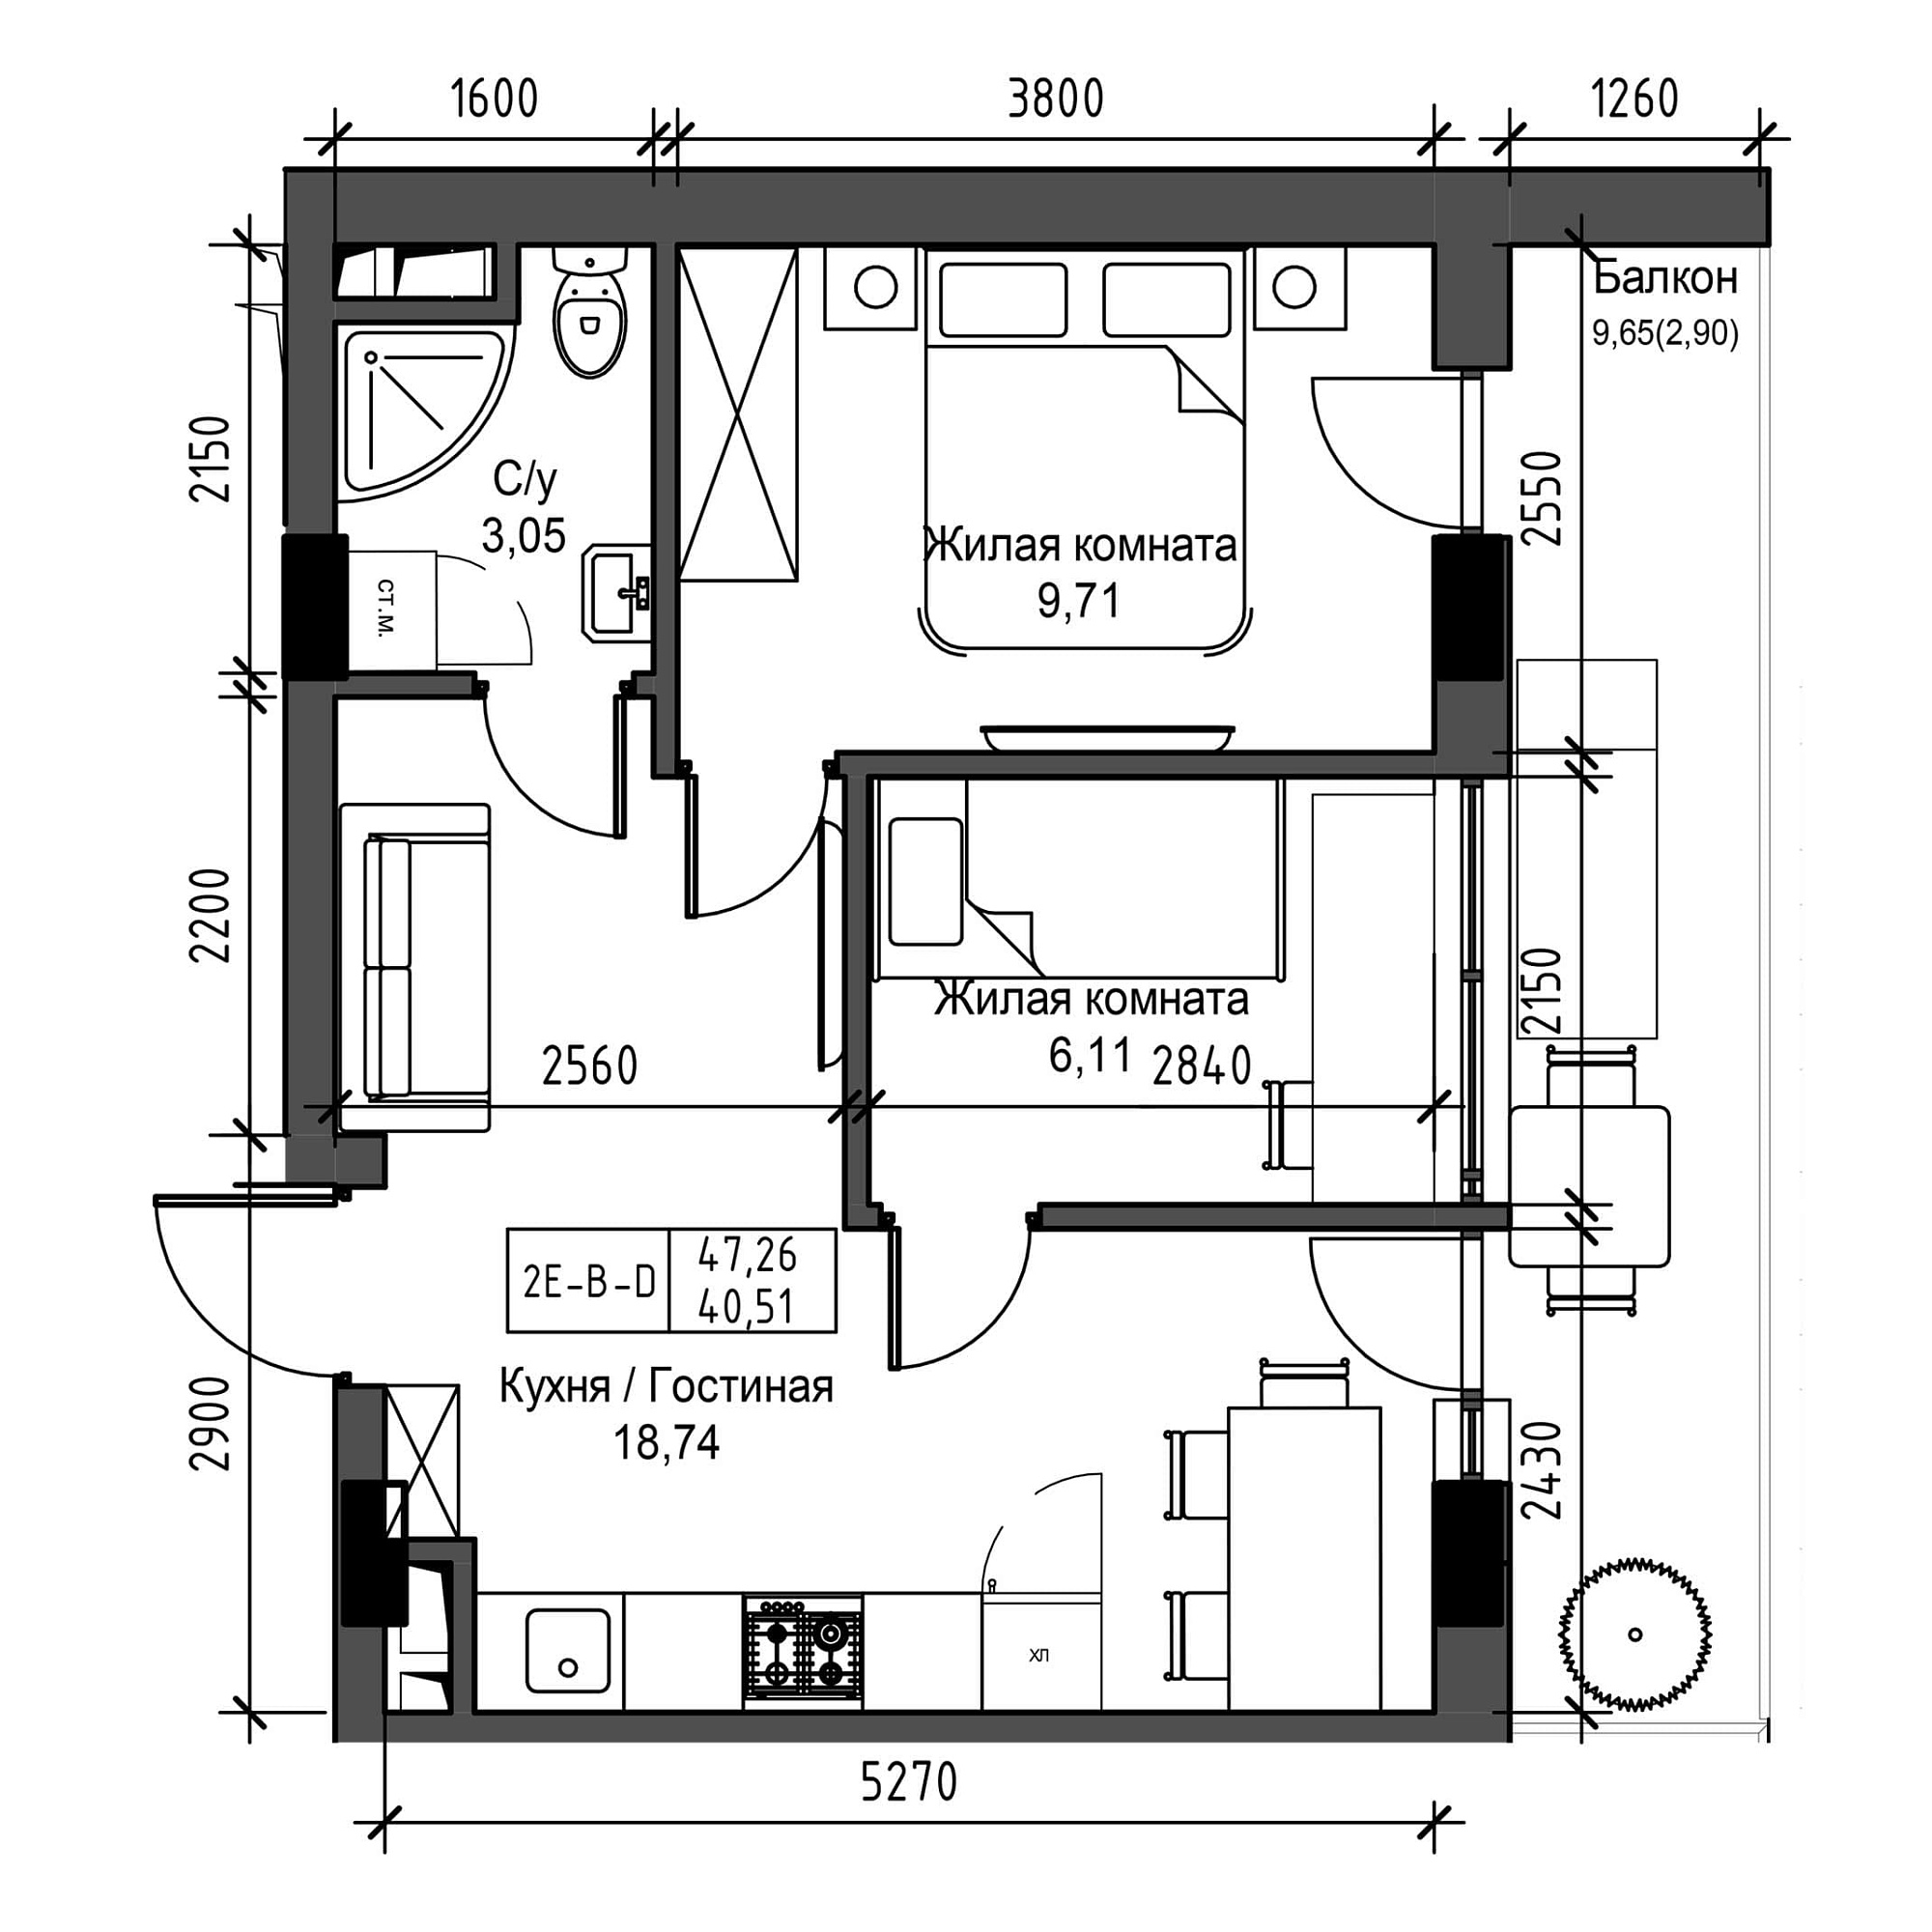 Planning 2-rm flats area 40.51m2, UM-001-04/0021.